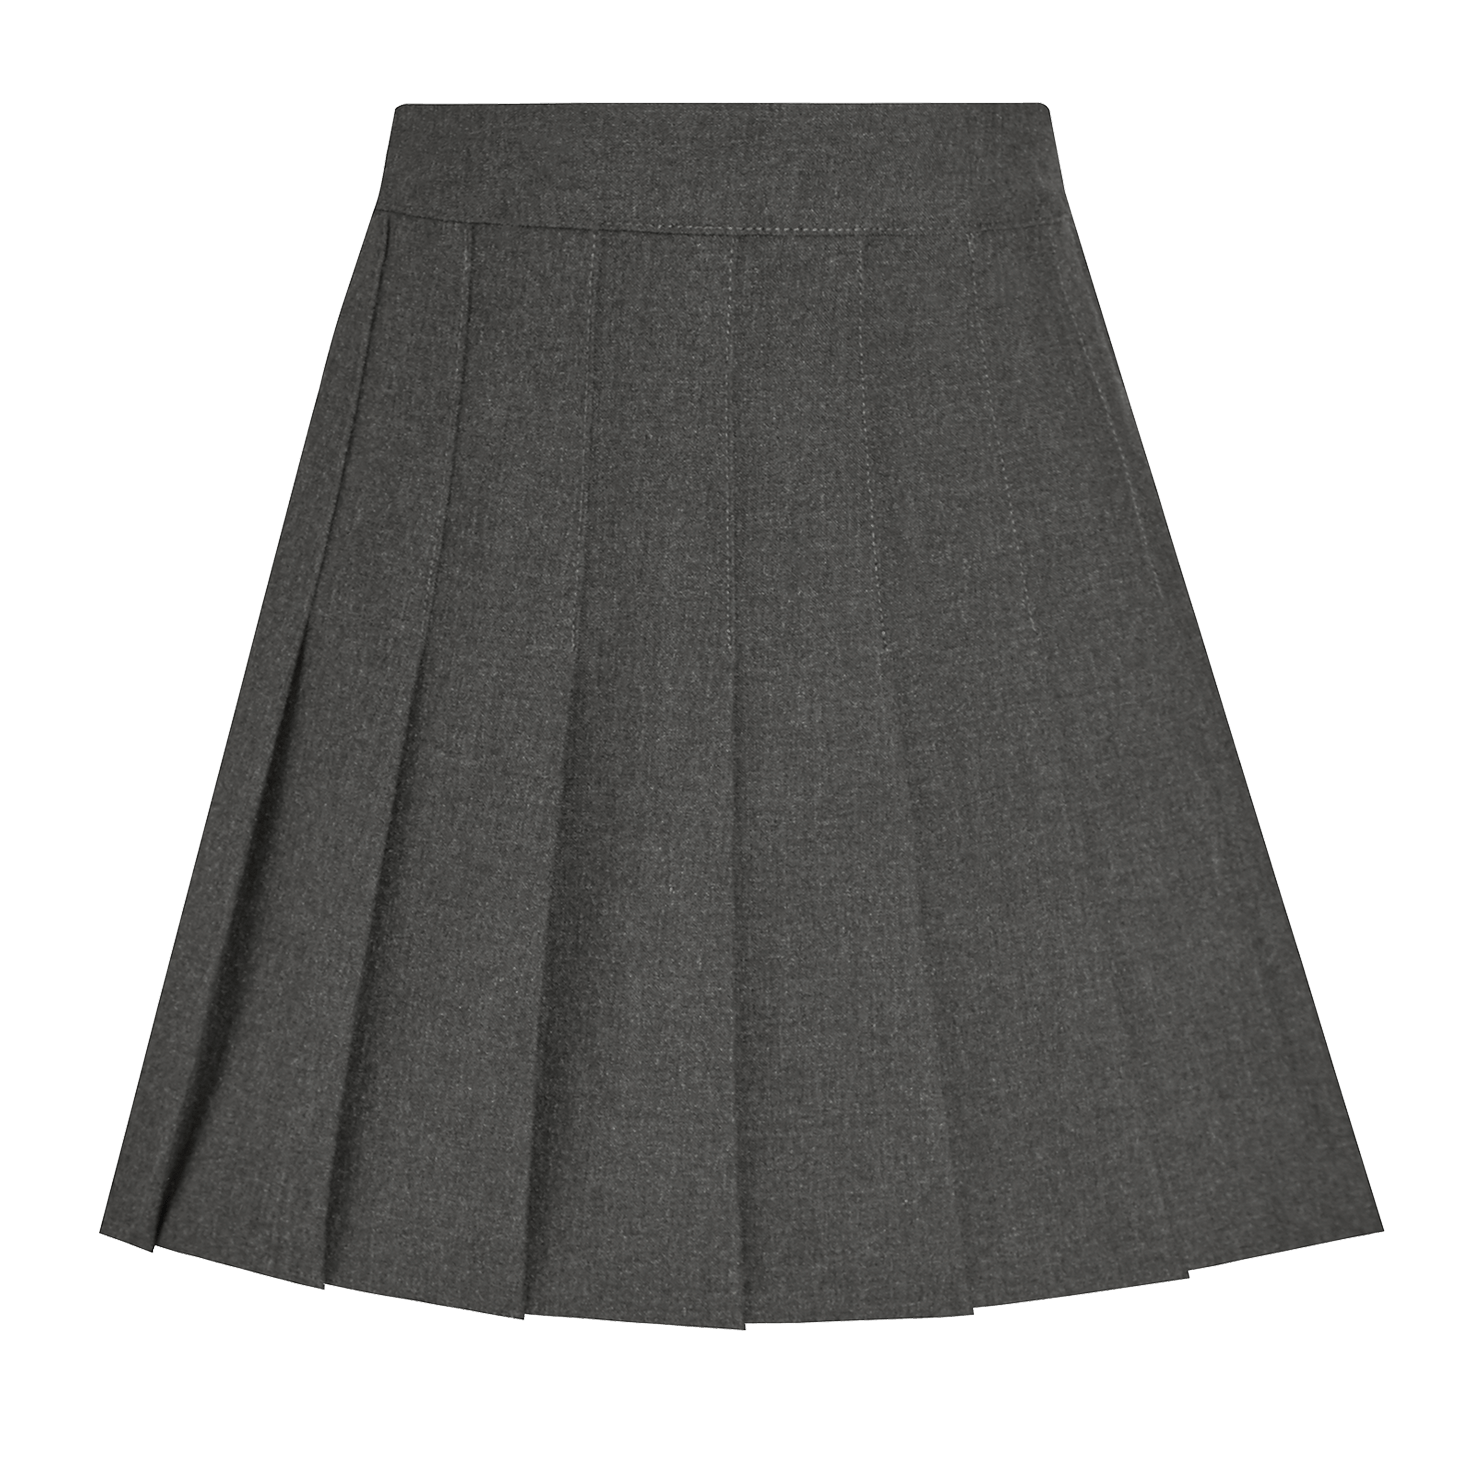 Junior stitched down knife pleat skirt by David Luke - black or grey ...